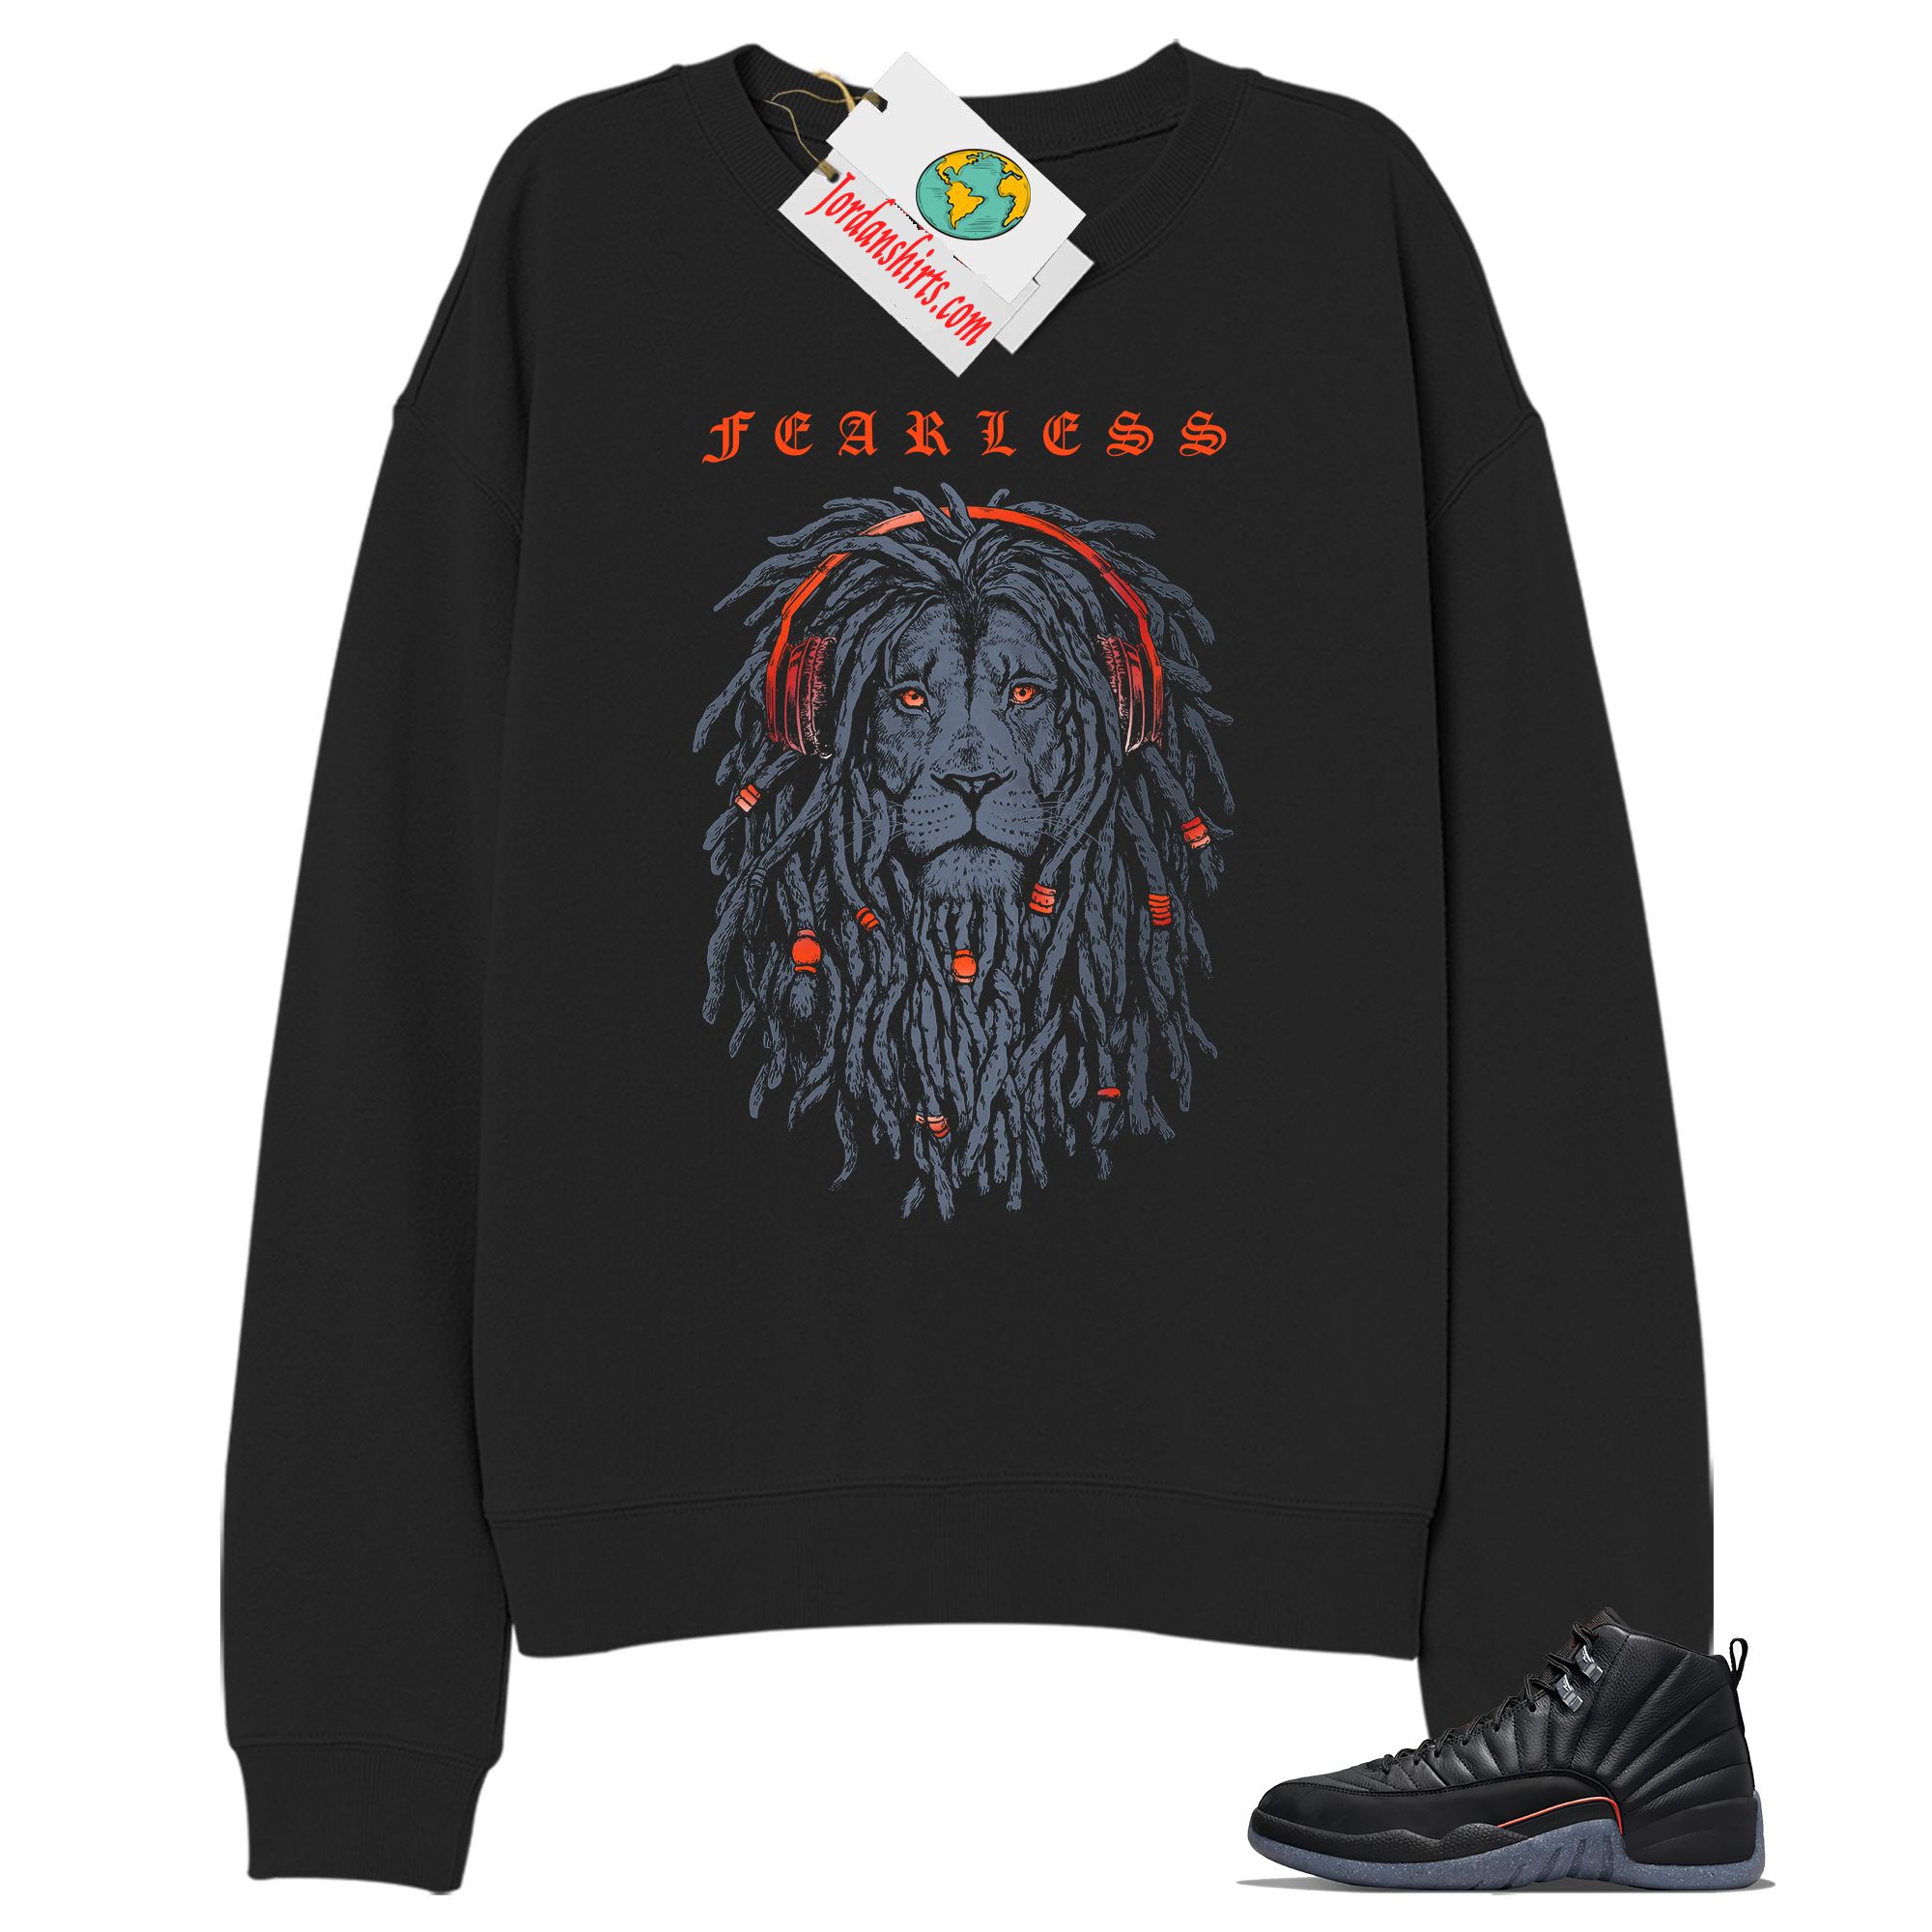 Jordan 12 Sweatshirt, Fearless Lion Black Sweatshirt Air Jordan 12 Utility Grind 12s Full Size Up To 5xl